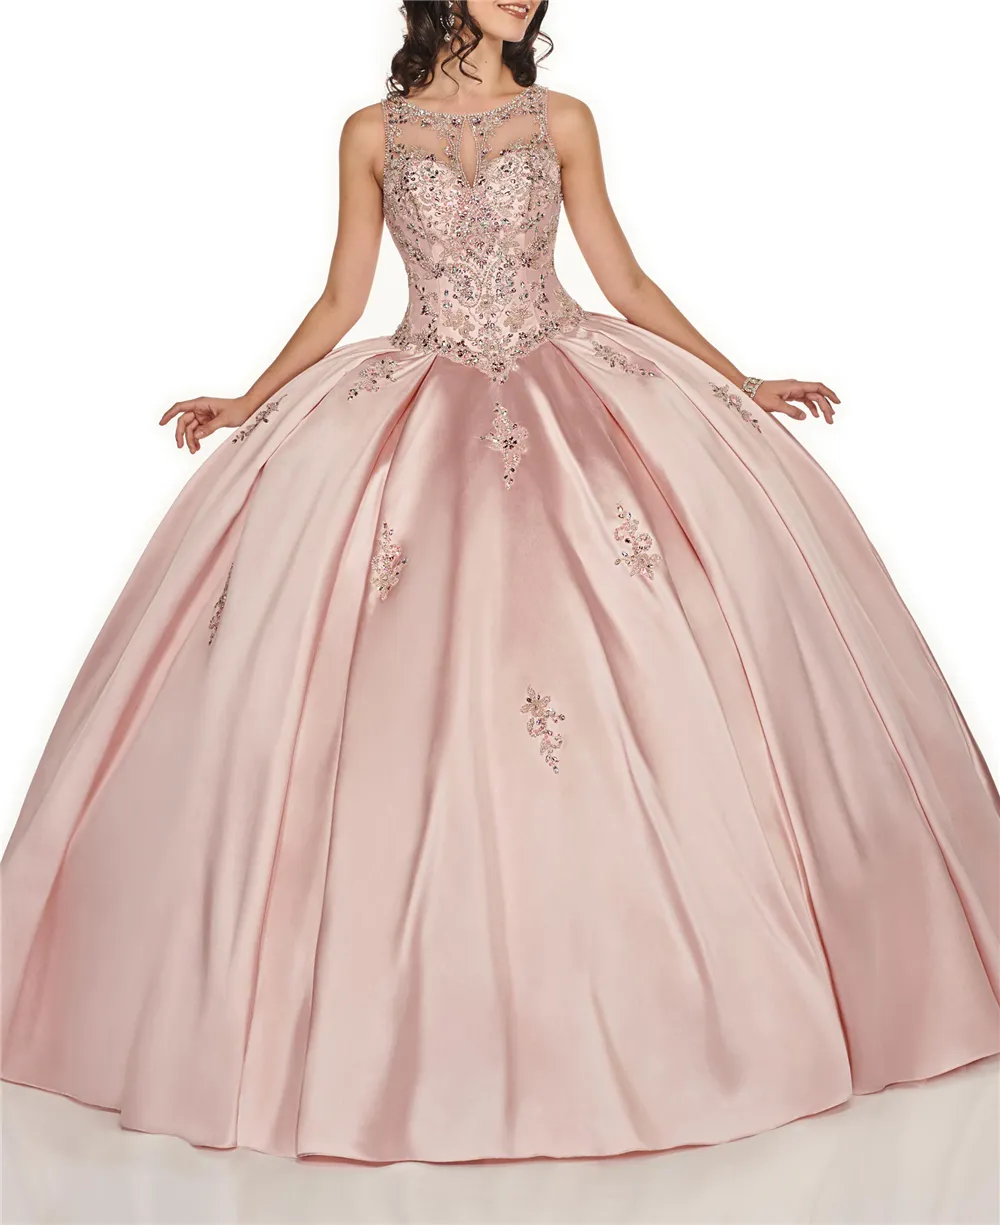 QD1518 Quinceanera elbiseler balo pembe saten kepçe yeni Lace Up tatlı 16 elbise için 15 yıl örgün balo parti pageant elbise